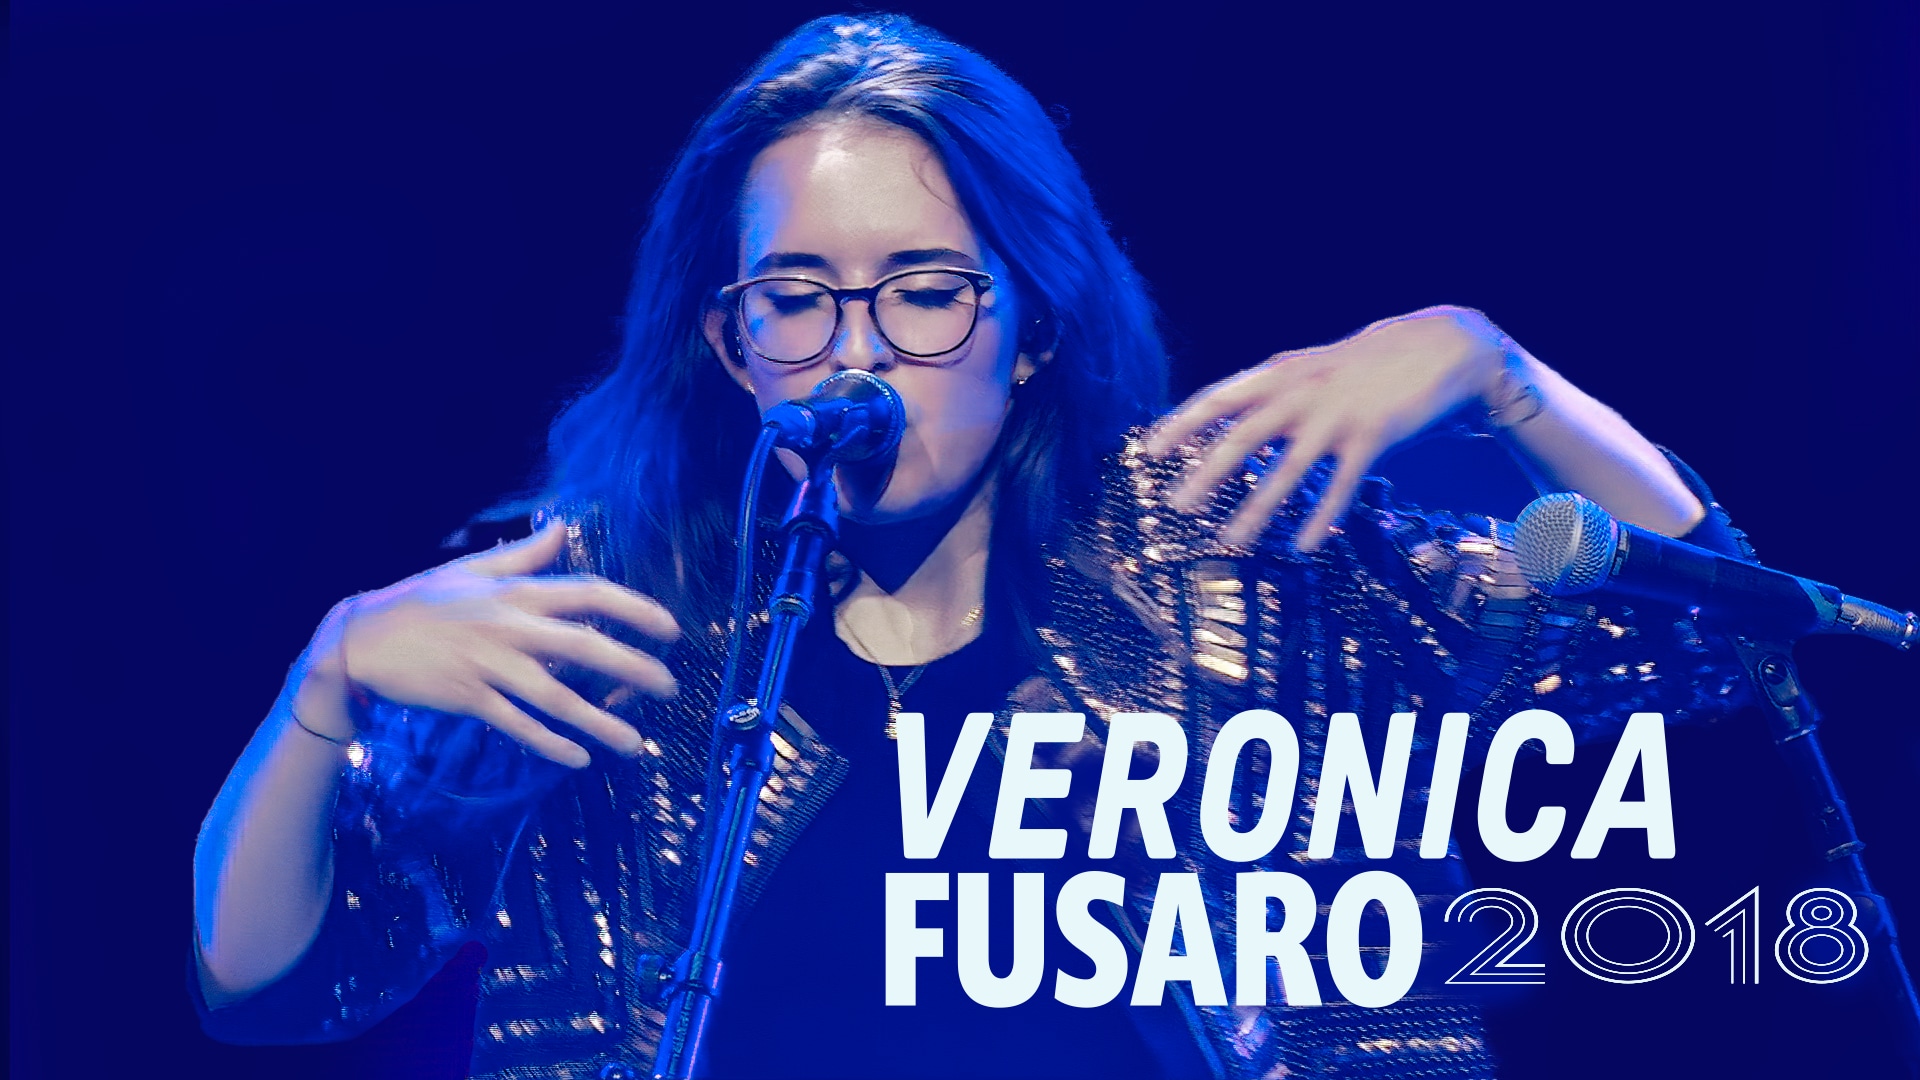 Veronica Fusaro